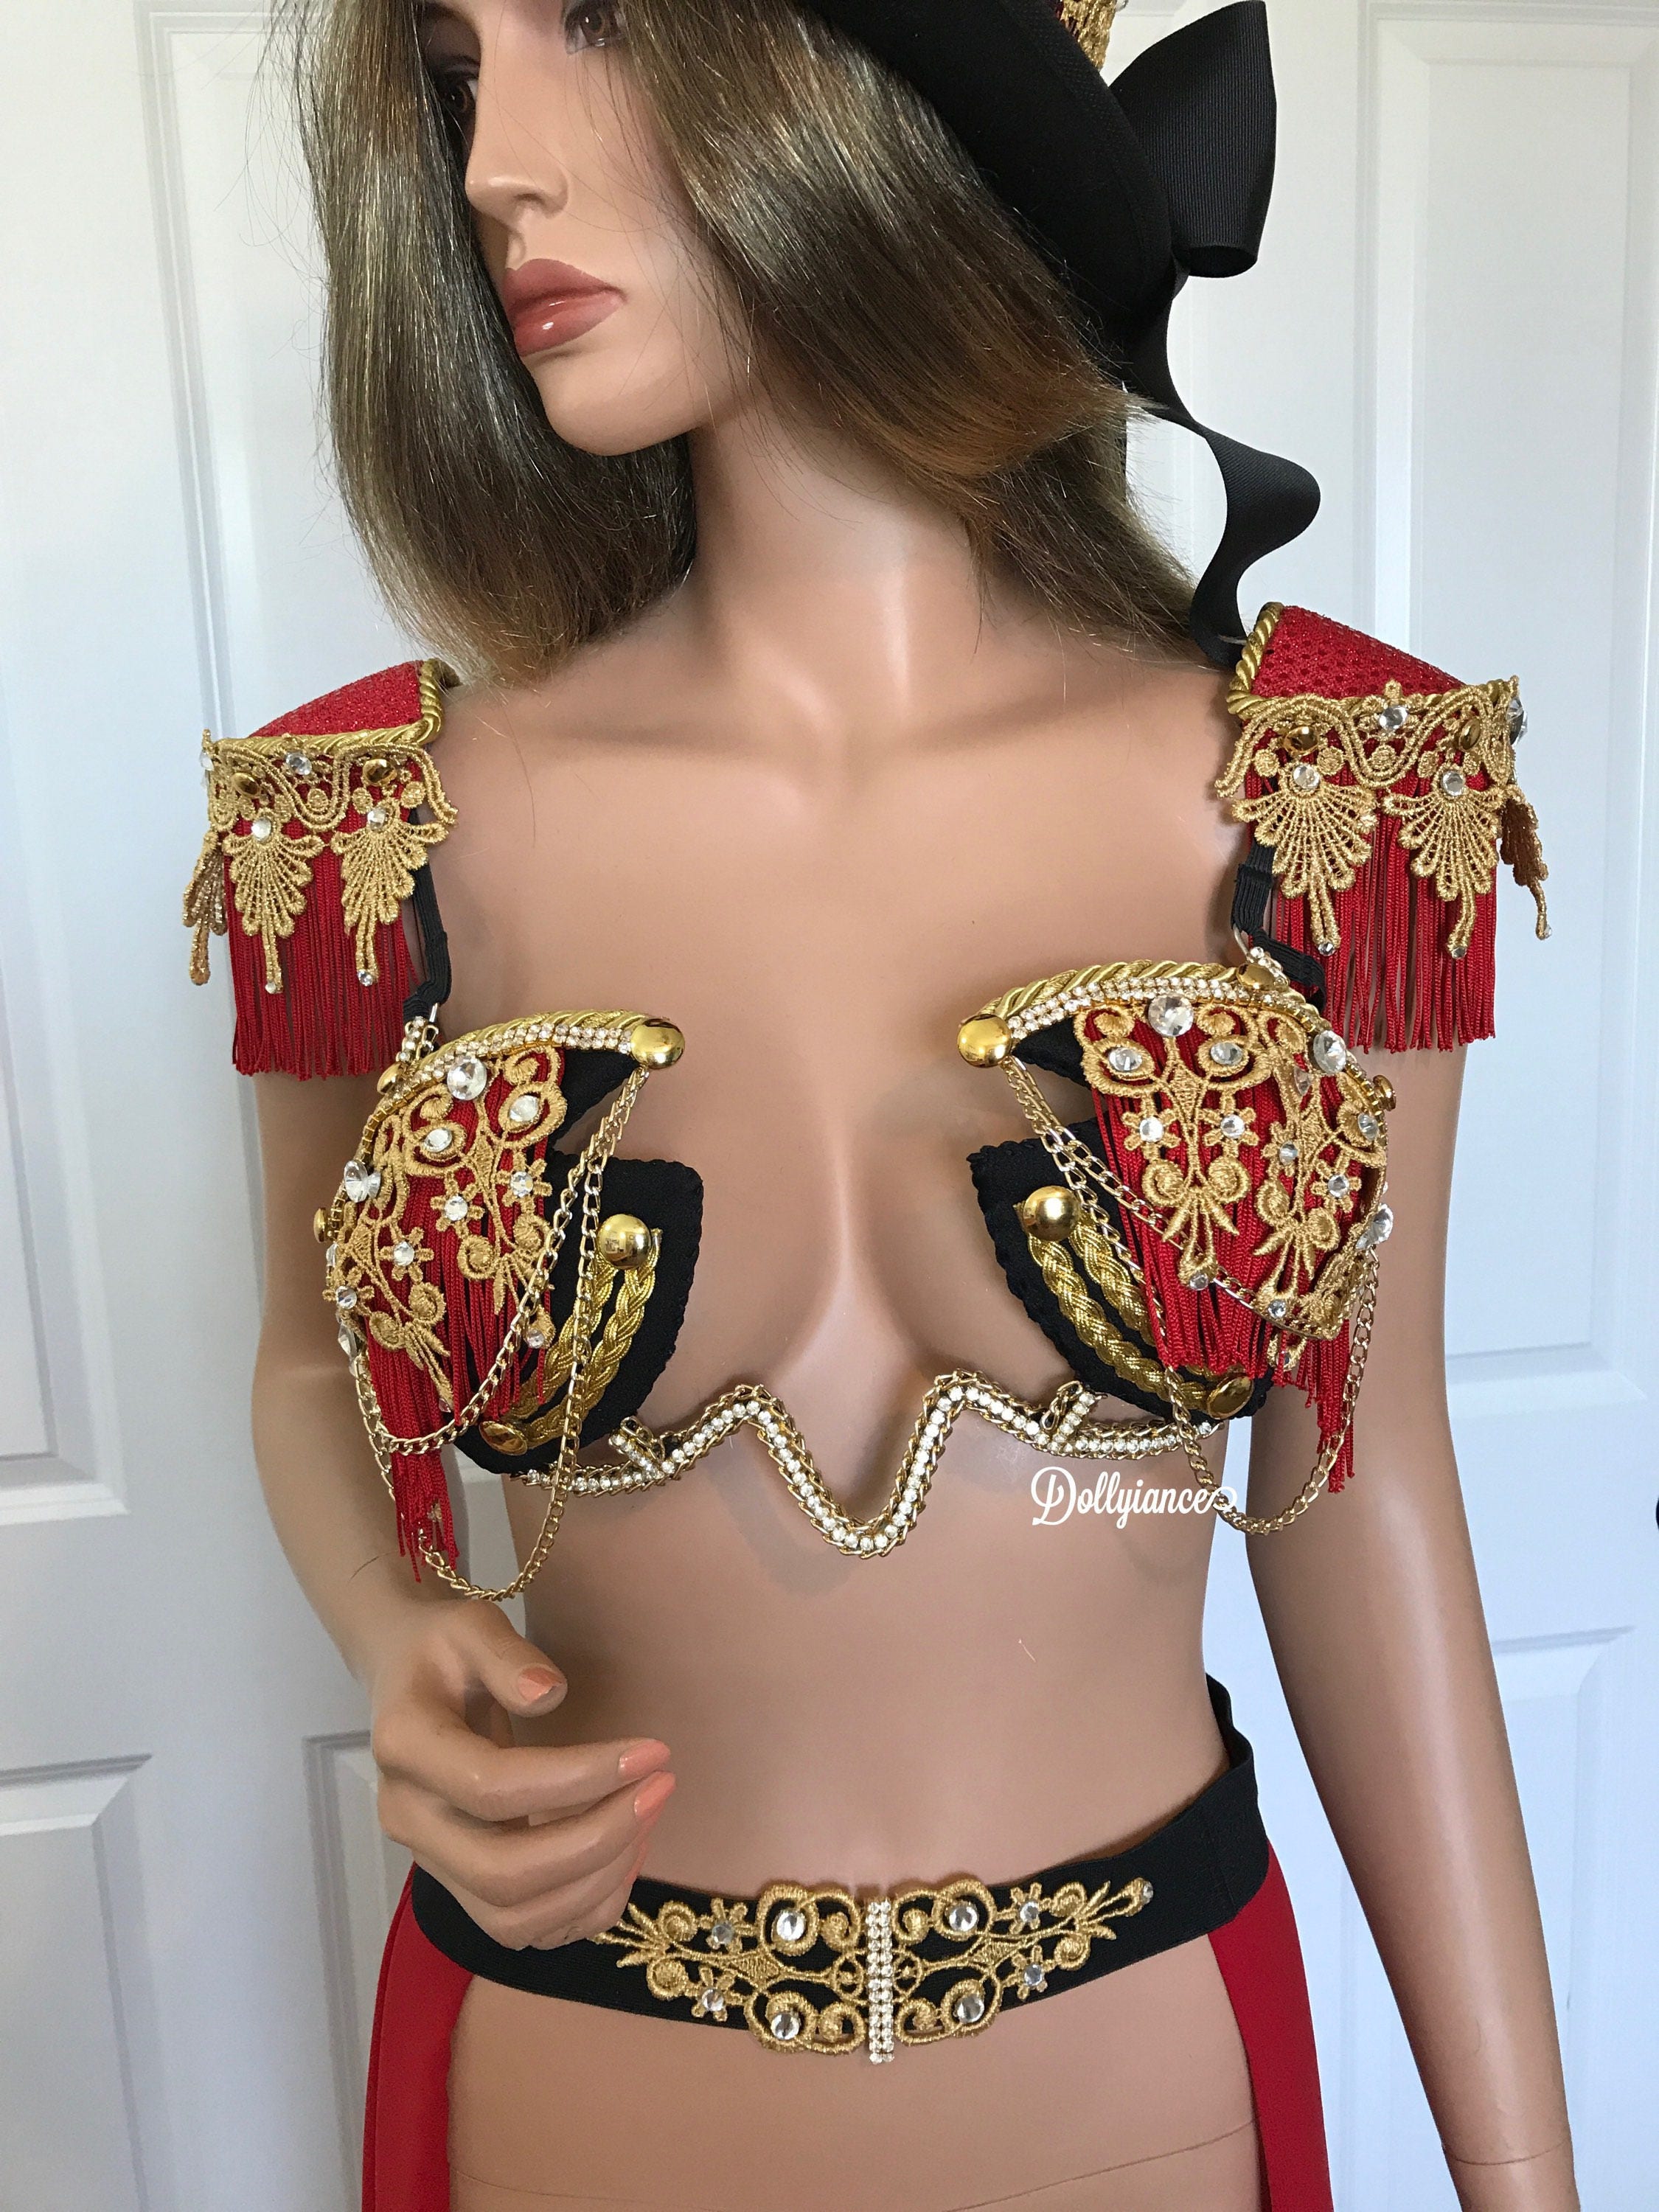 belgrade homemade costume ringmaster sexy Sex Images Hq